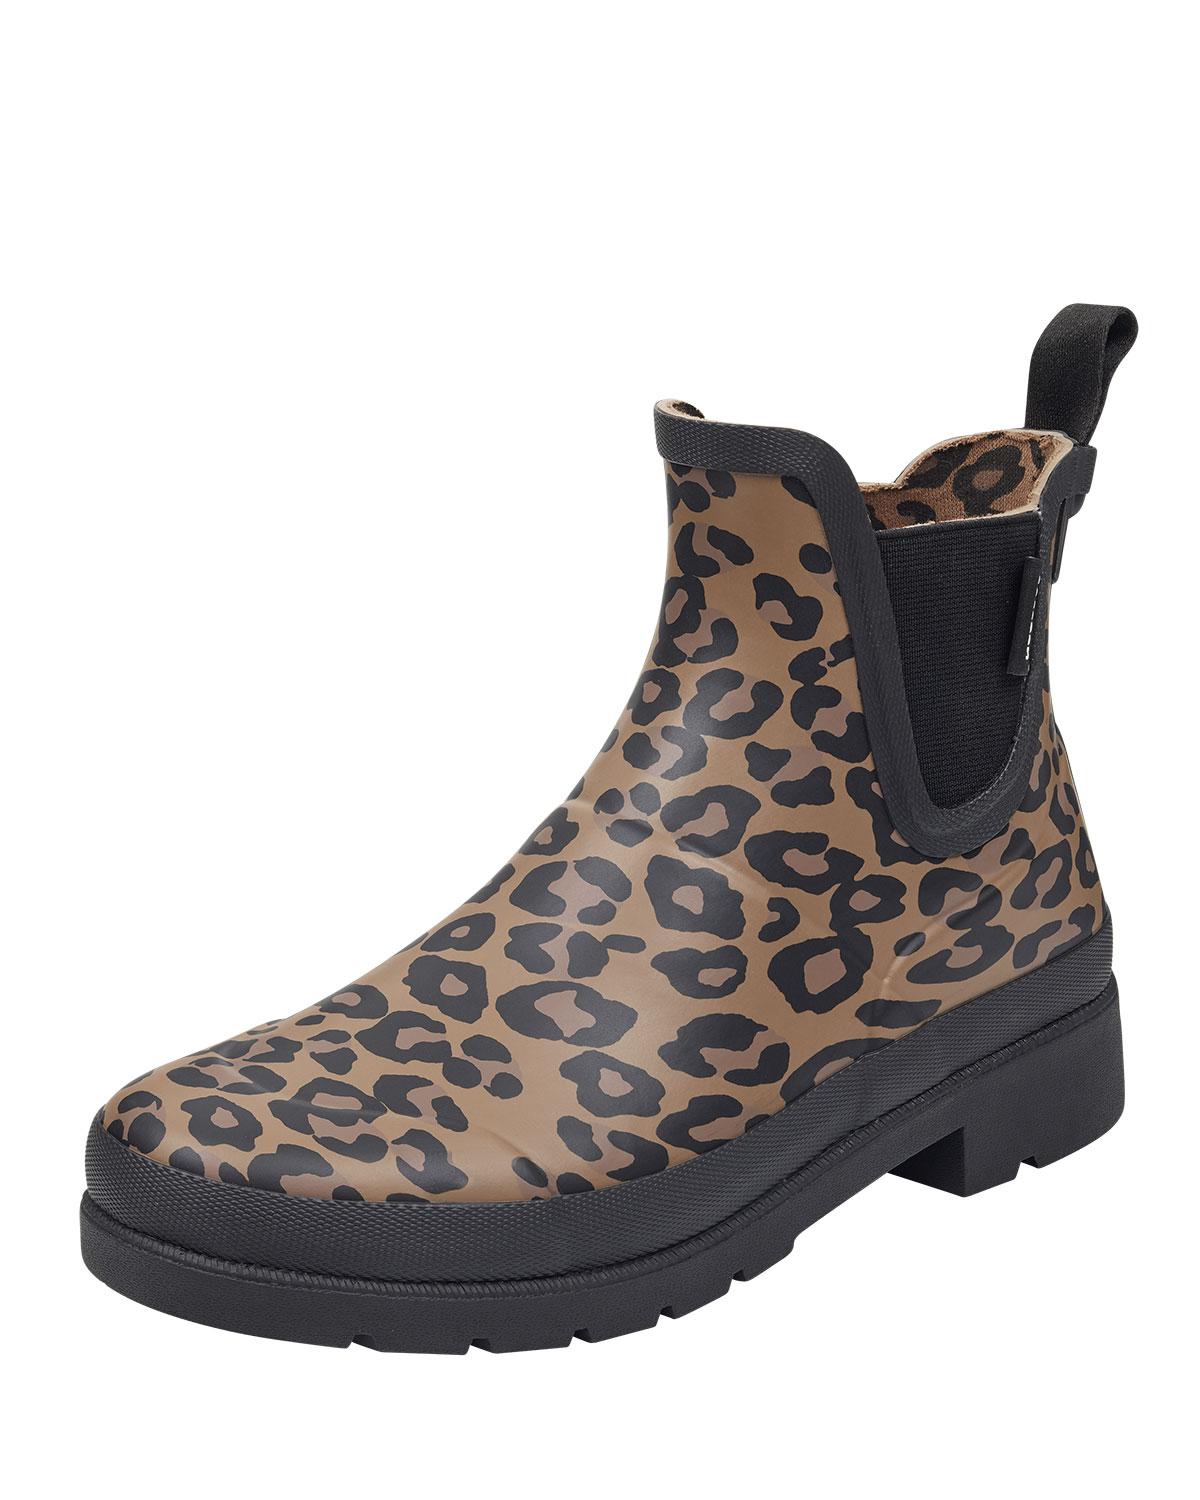 Lyst - Tretorn Lina Leopard-print Rubber Rain Boots in Brown